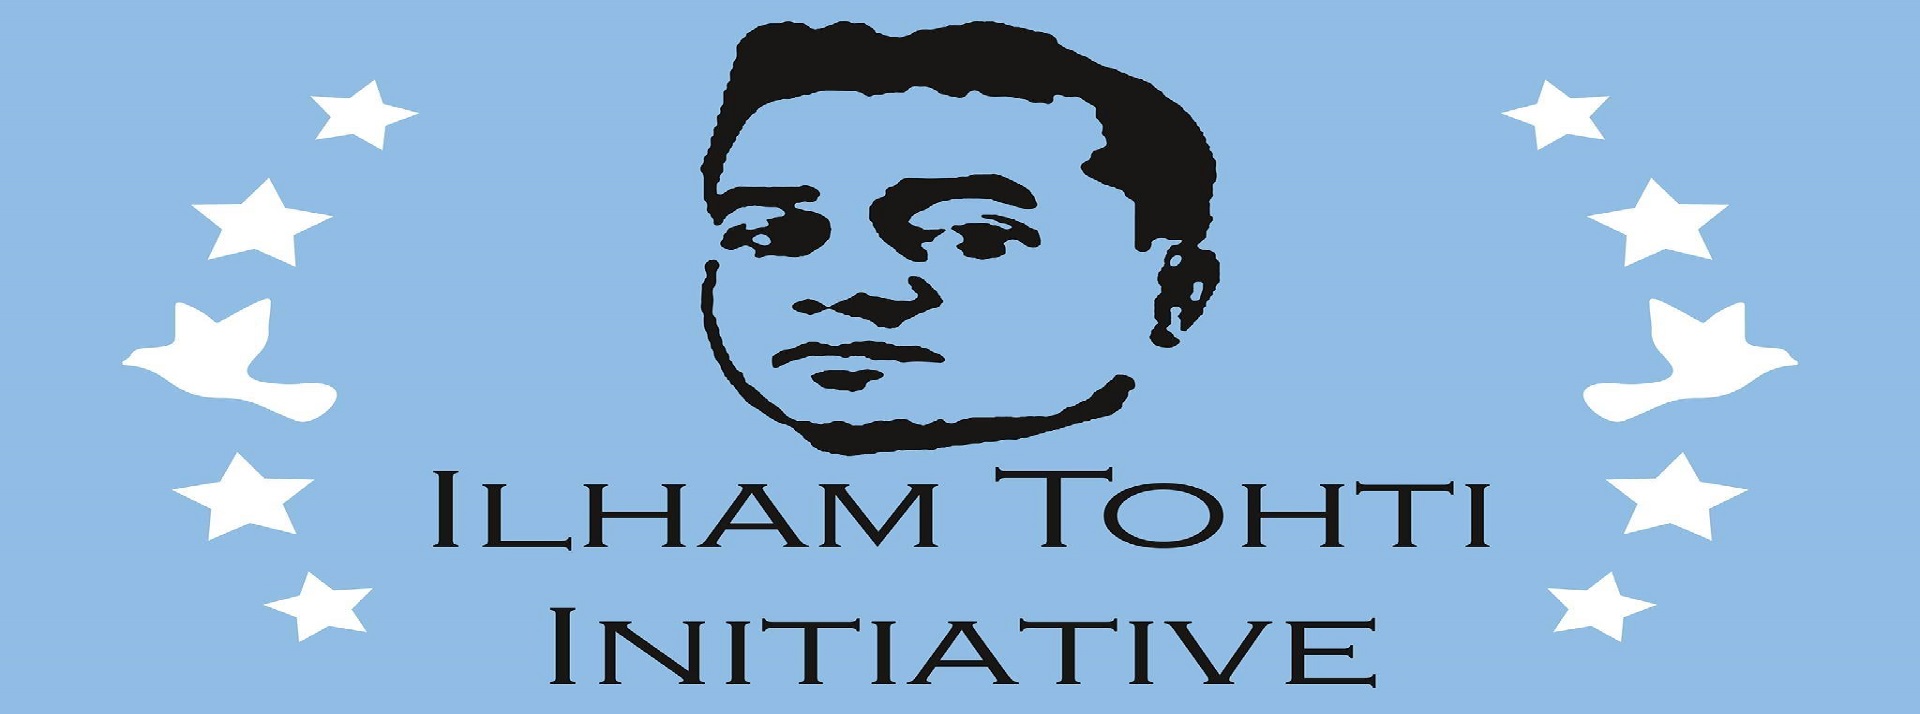 Ilham Tohti Initiative